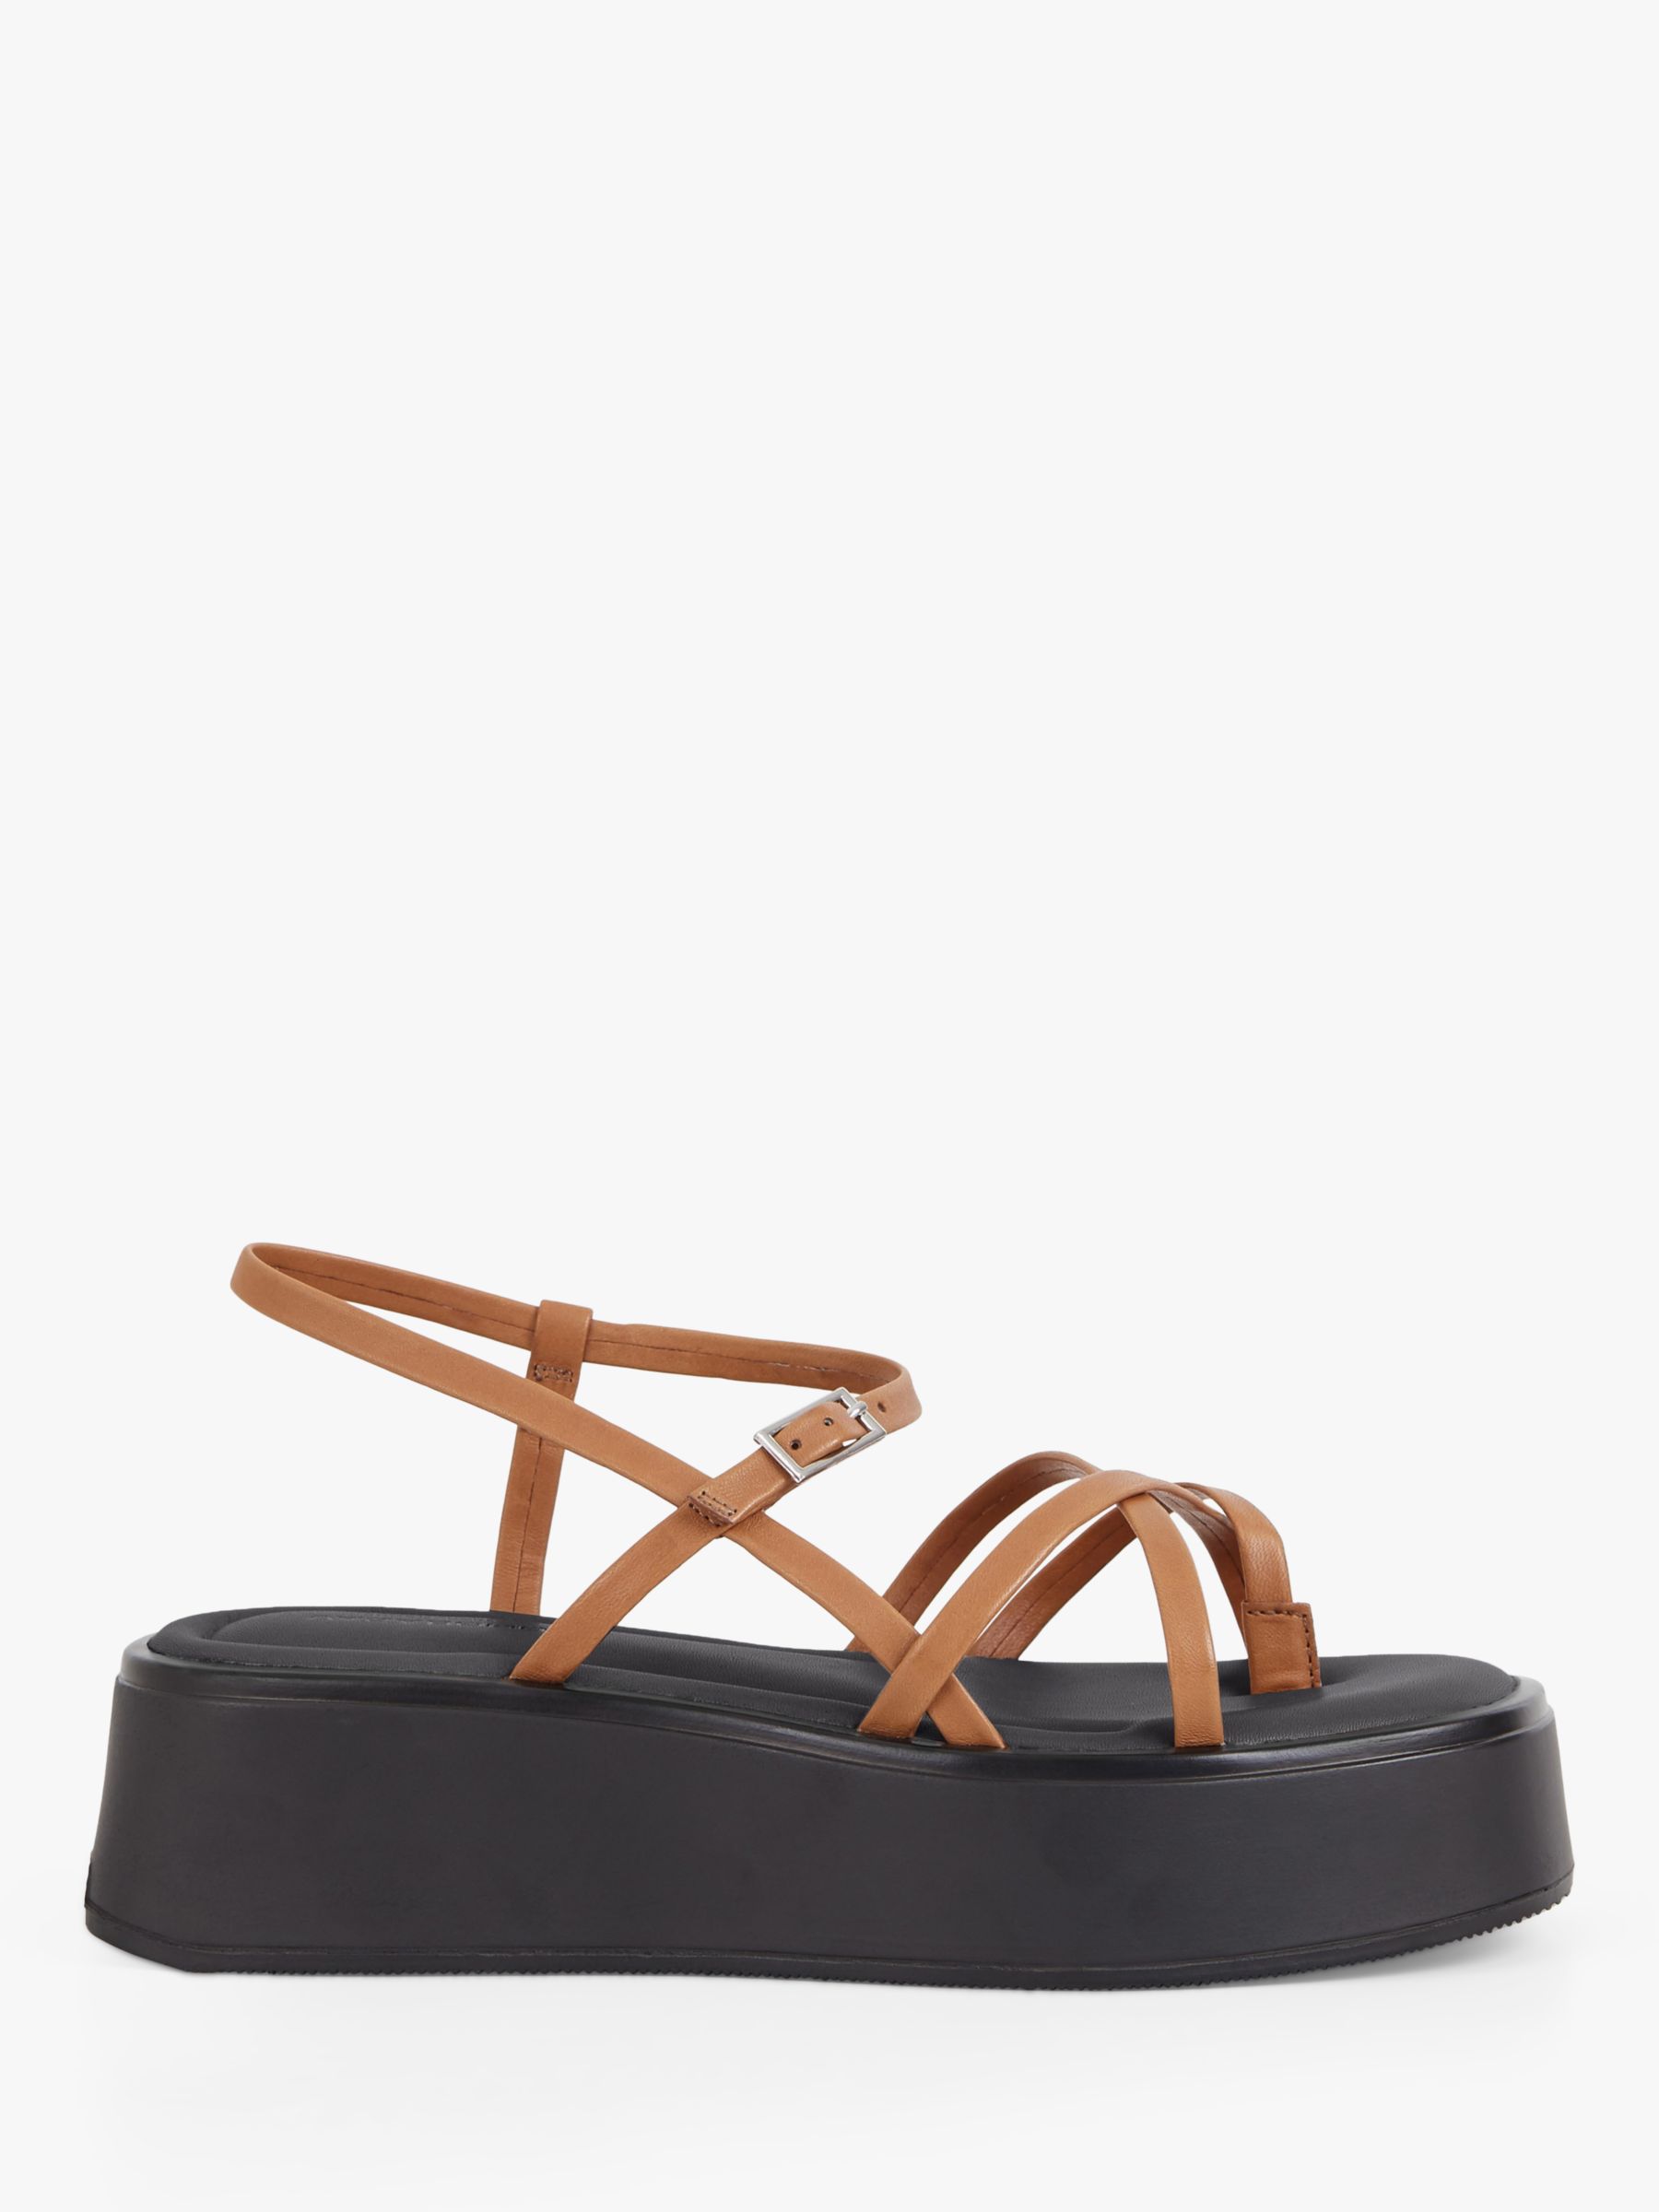 Shoemakers Courtney Strappy Leather Flatform Mule Sandals, Cognac, 4